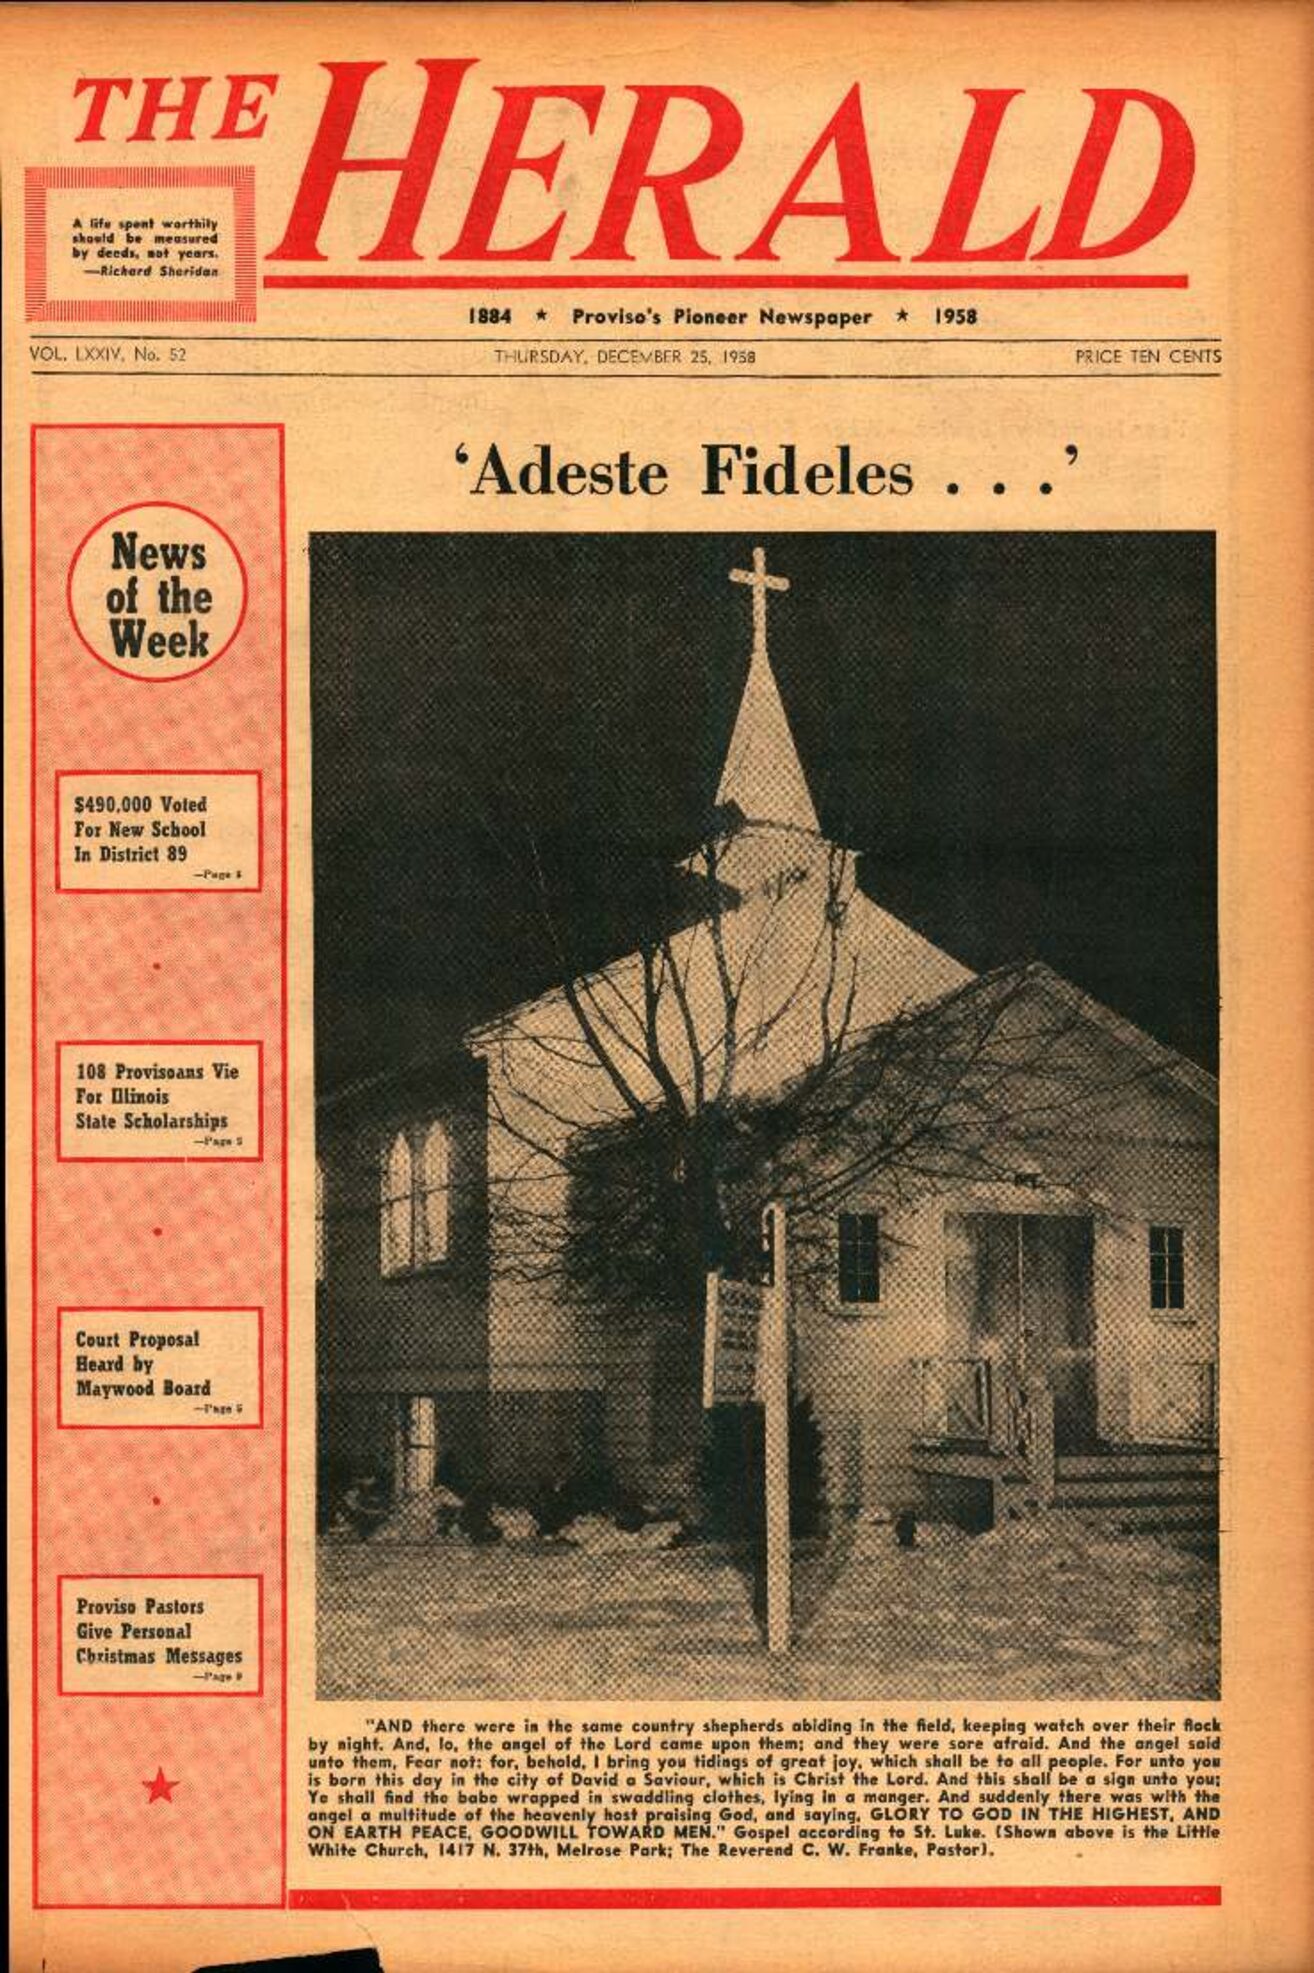 The Herald – 19581225